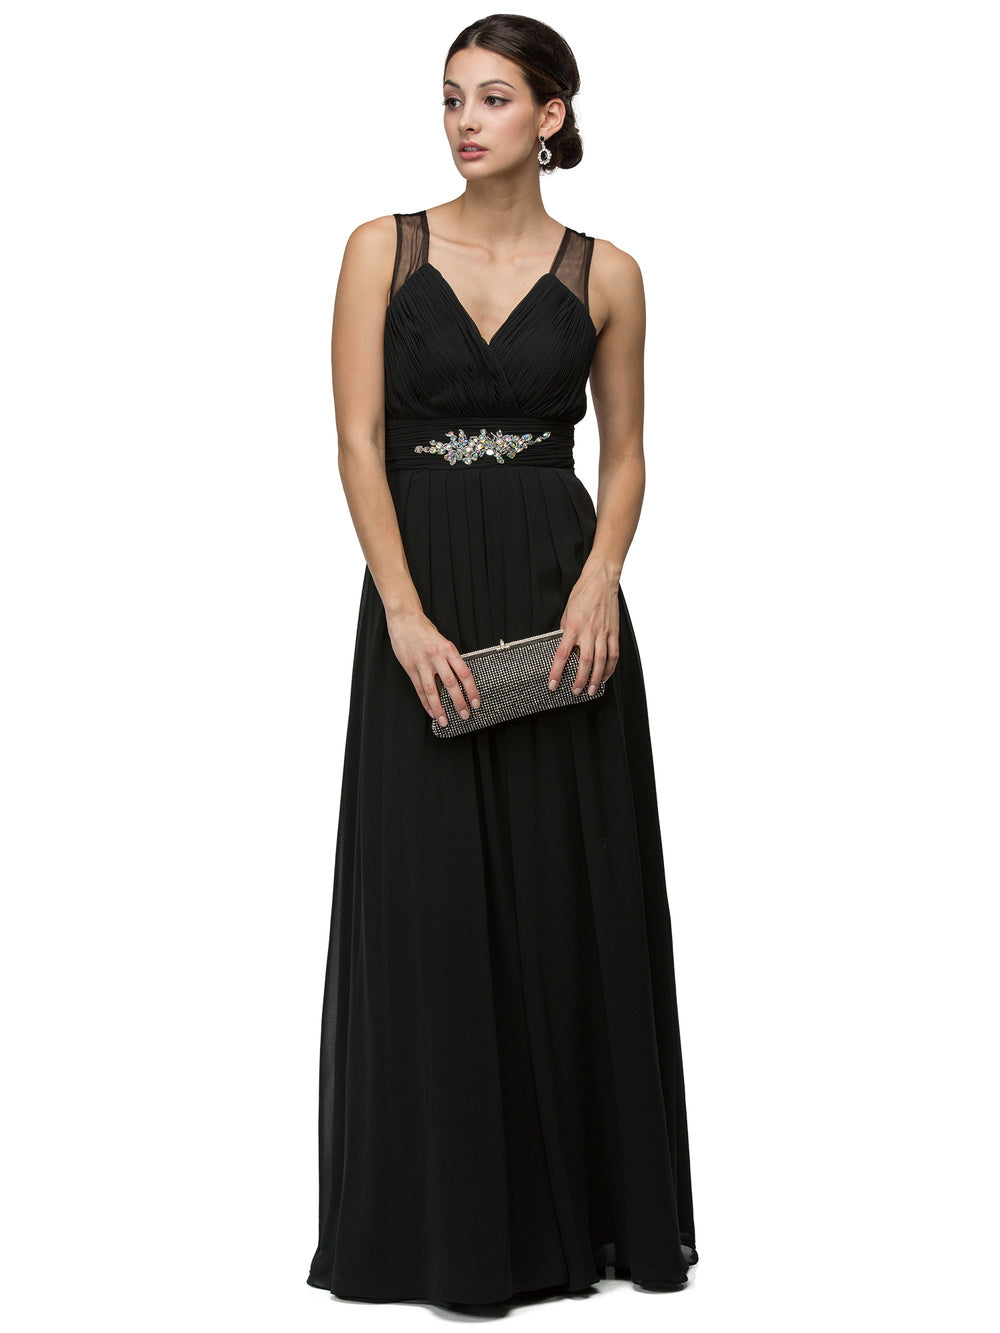 Long Black Formal Prom Dress